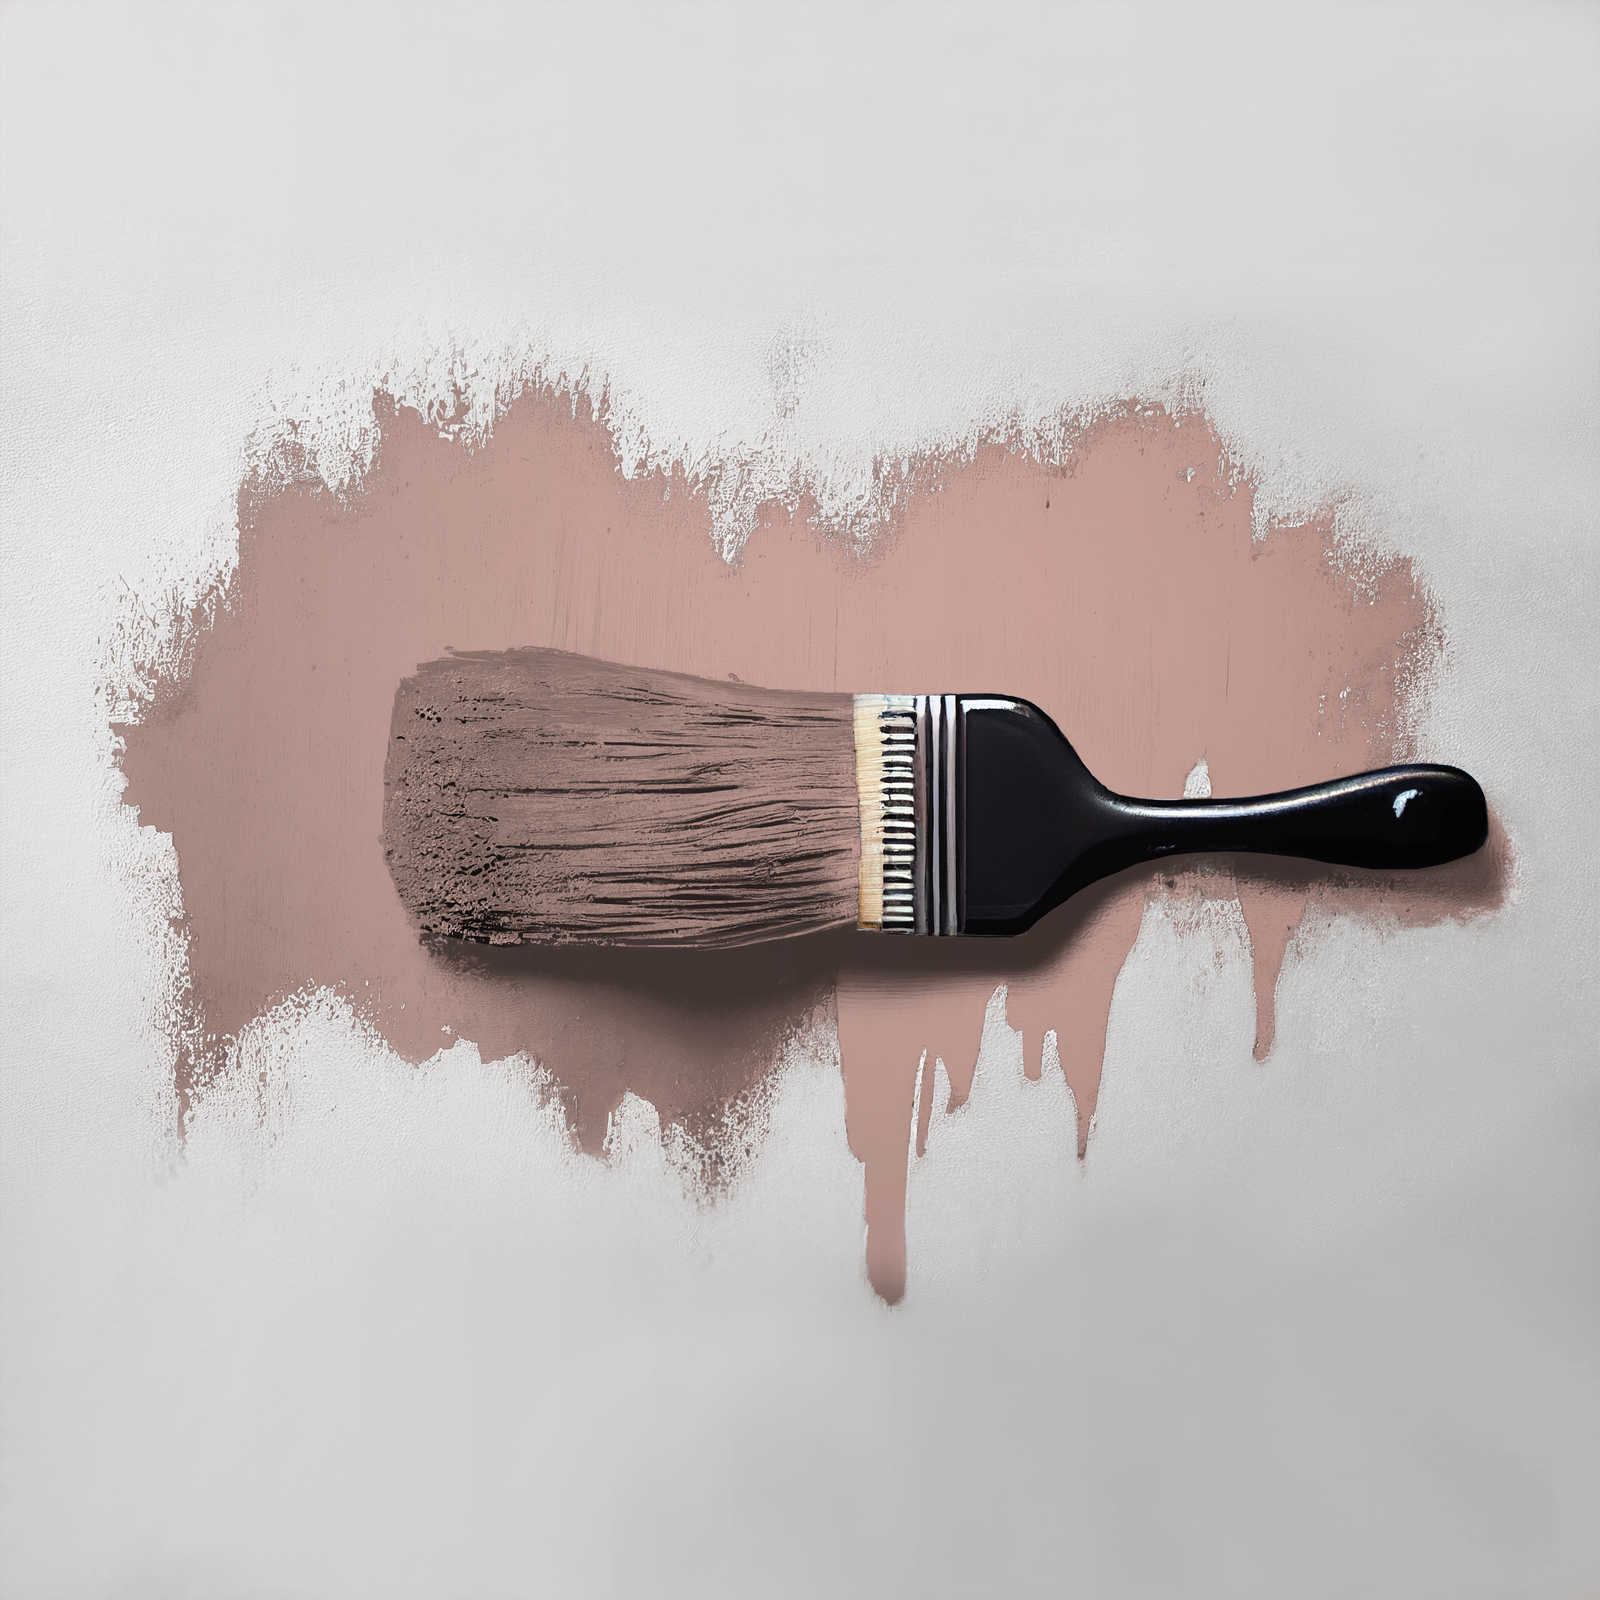             Pittura murale TCK7002 »Jellied Jostaberry« in beige rossastro – 5,0 litri
        